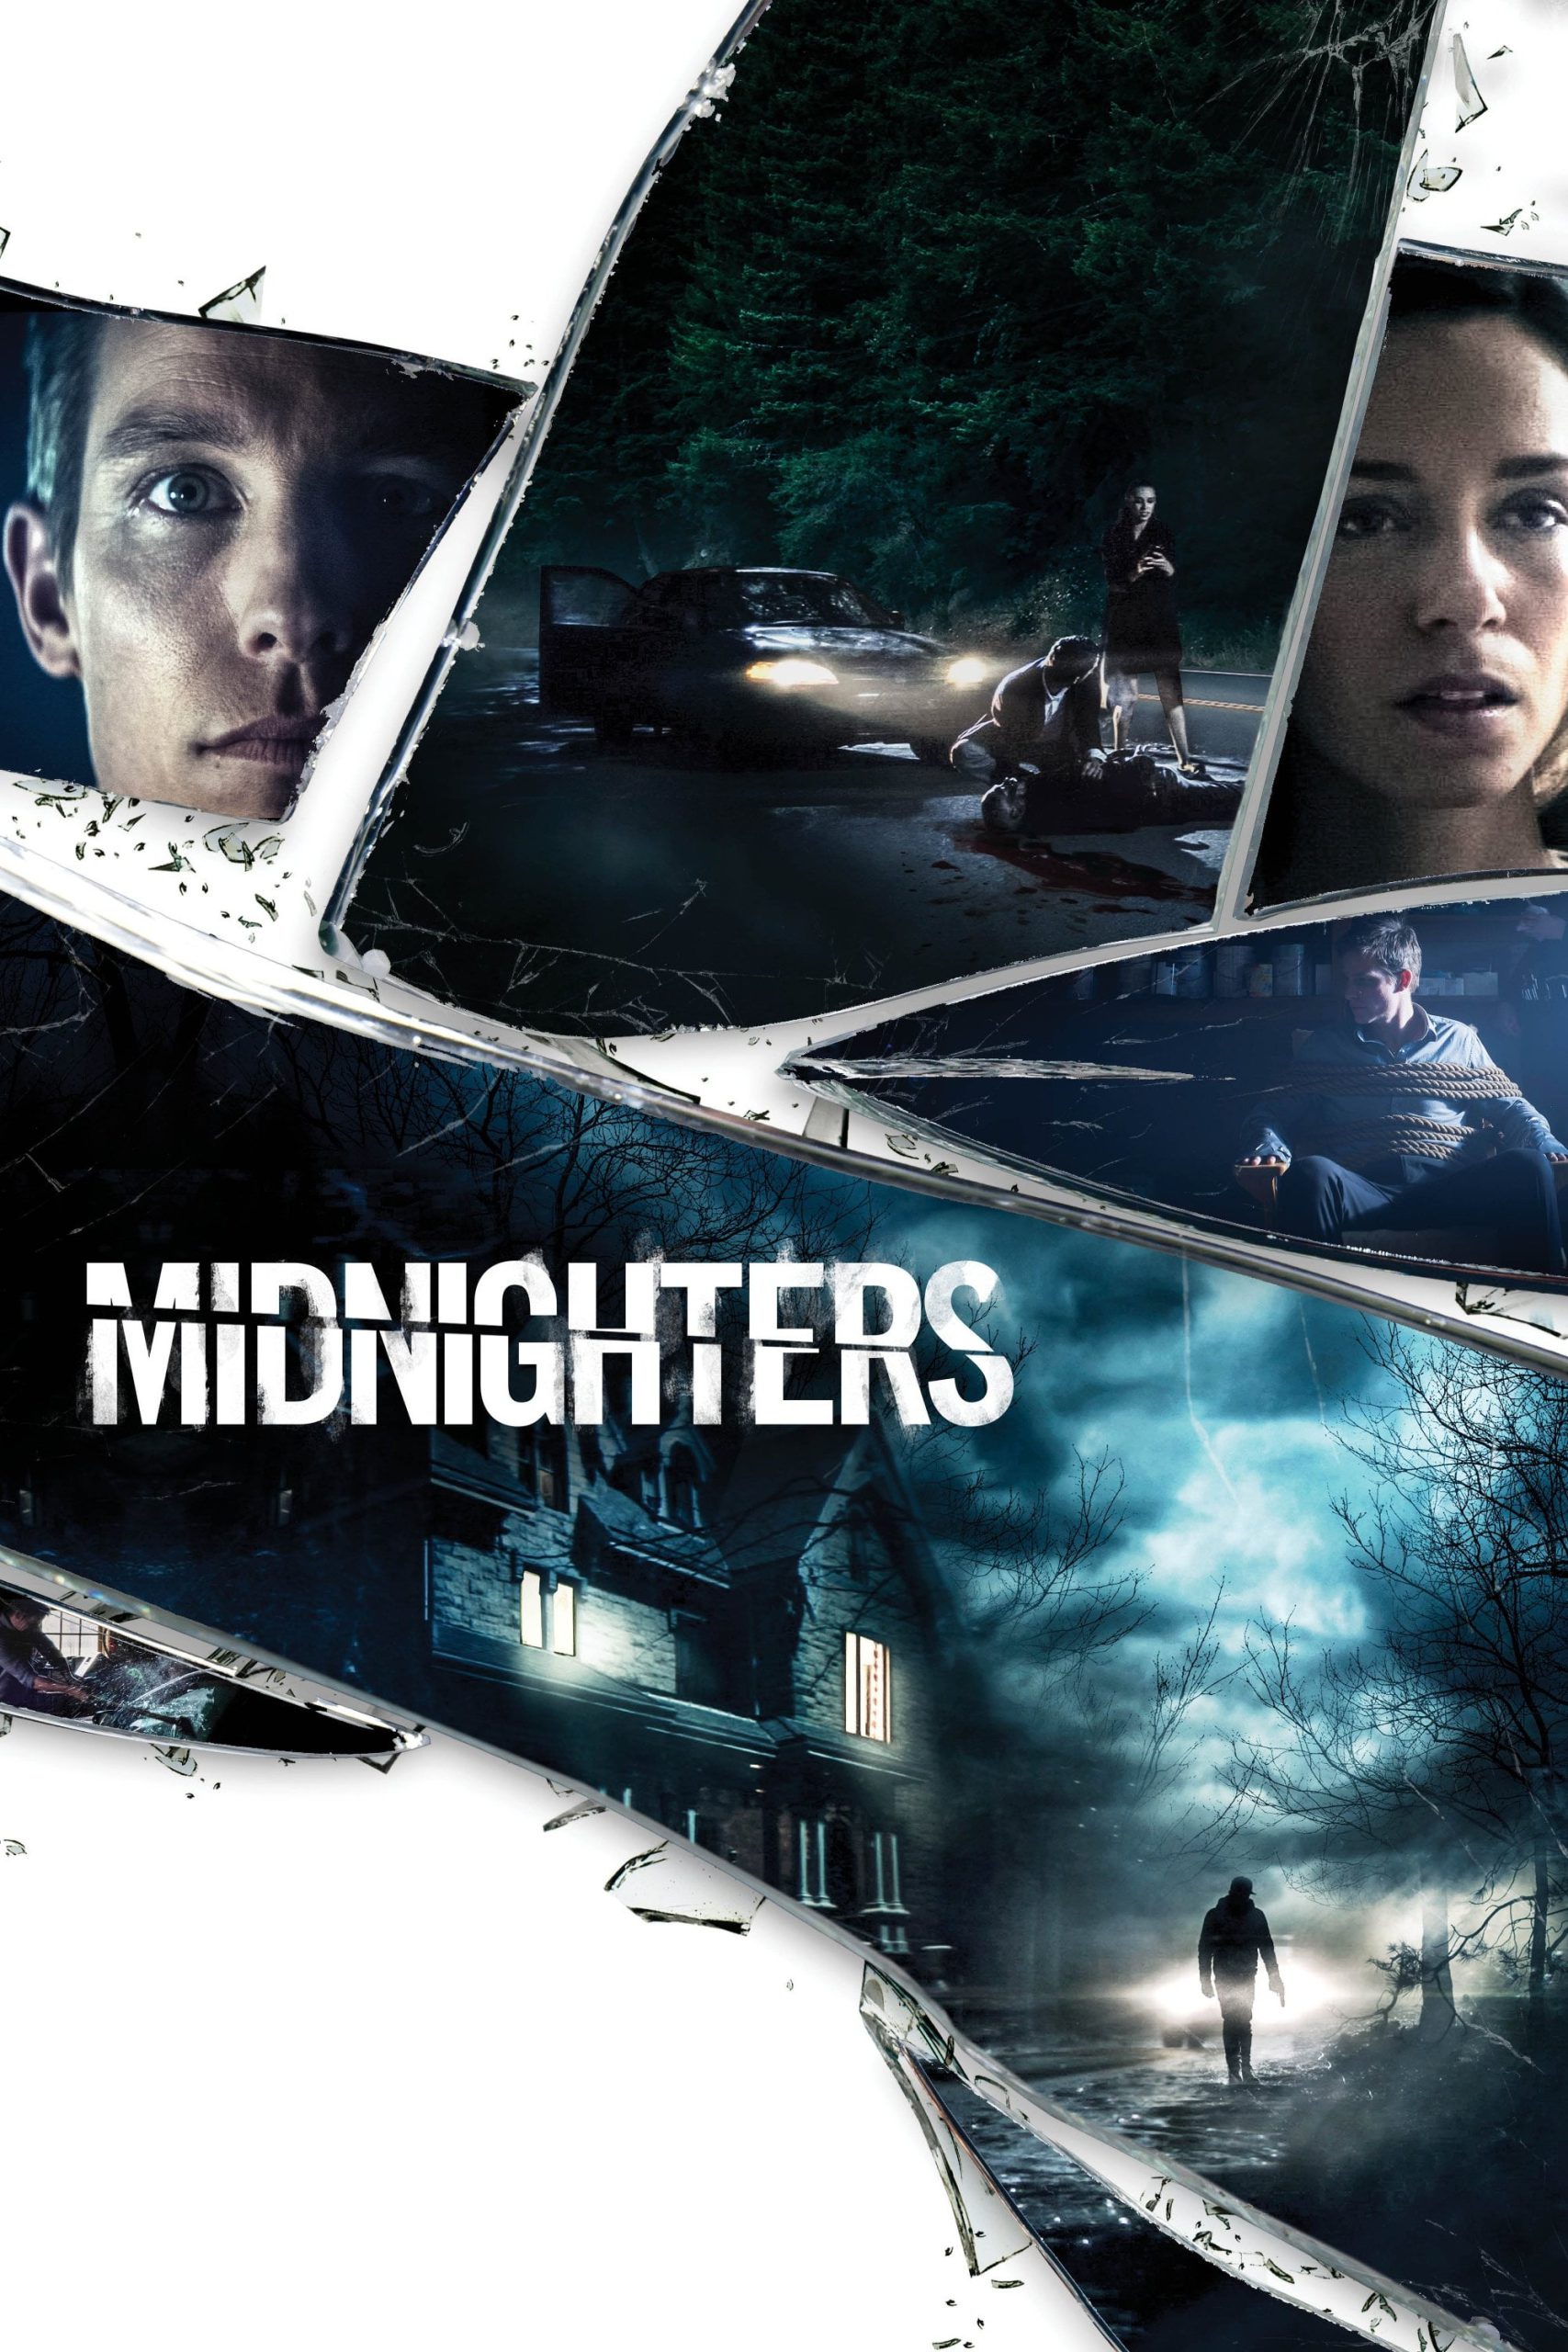 Midnighters [Sub-ITA] (2017)